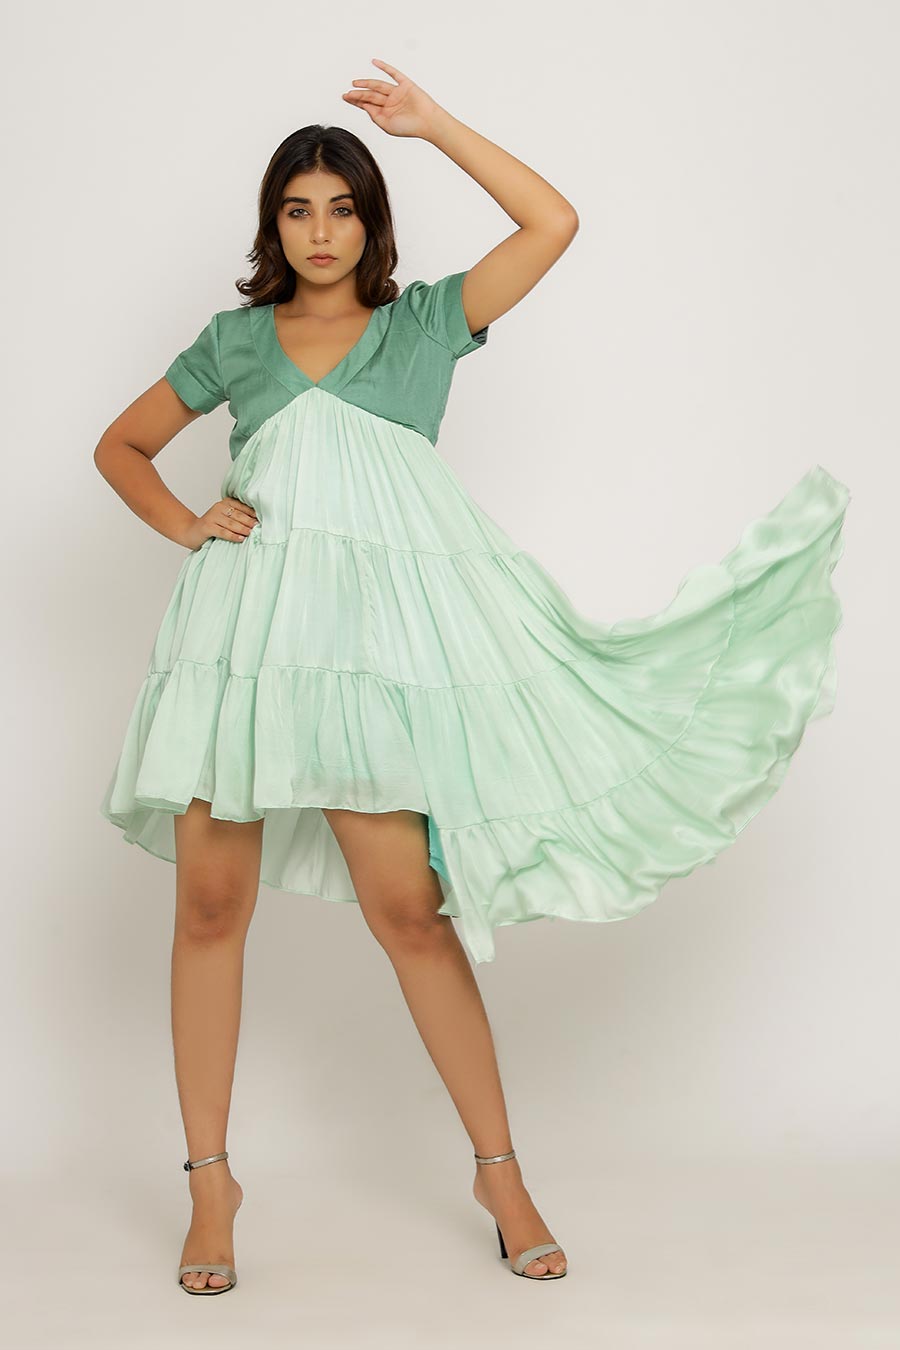 Teal & Tea Green Asymmetrical Dress